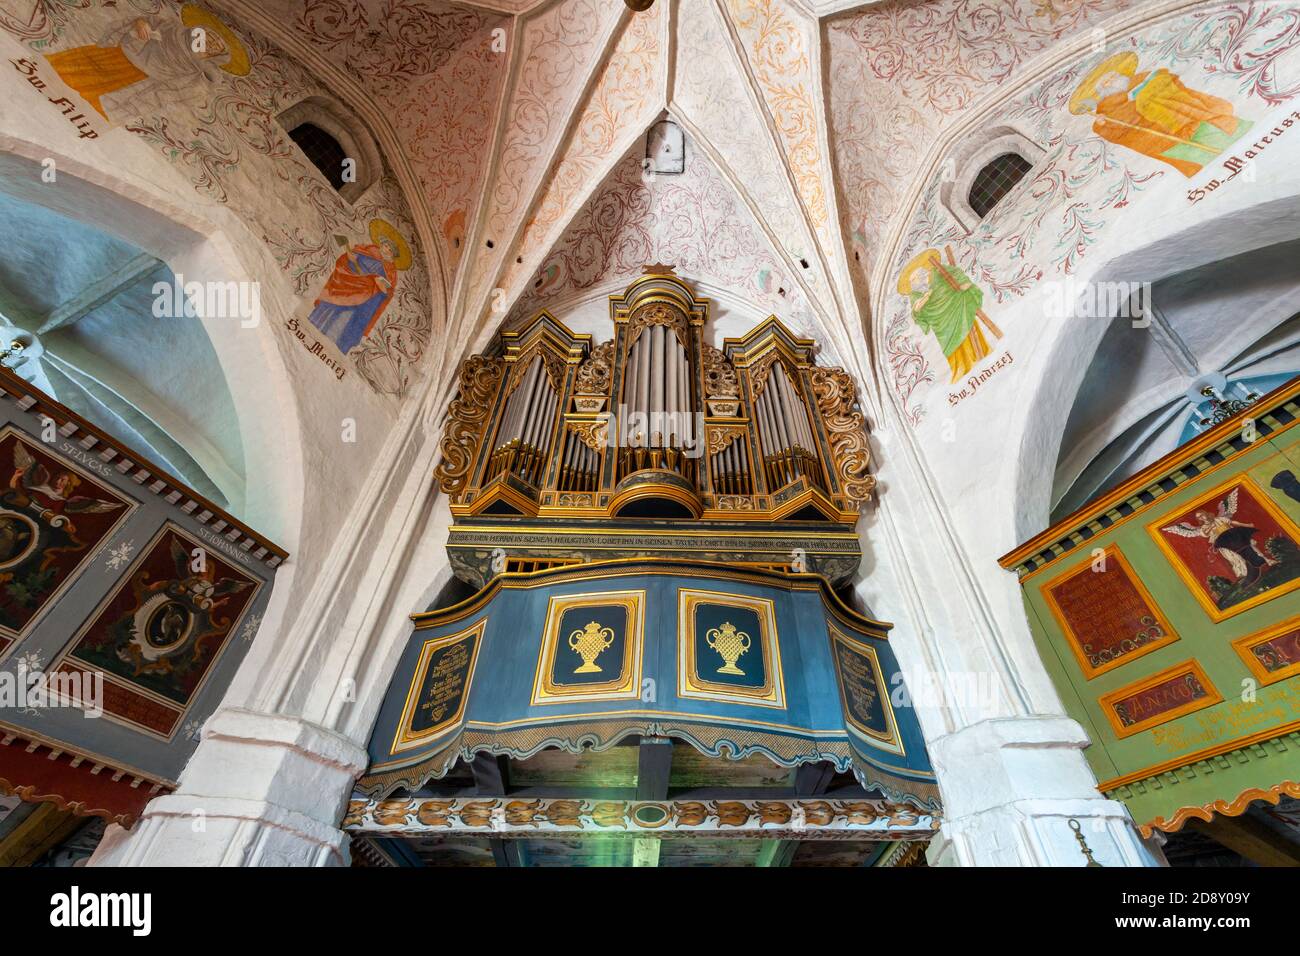 Darlowo, a church from the 14th century, West Pomeranian Voivodeship, Poland Stock Photo